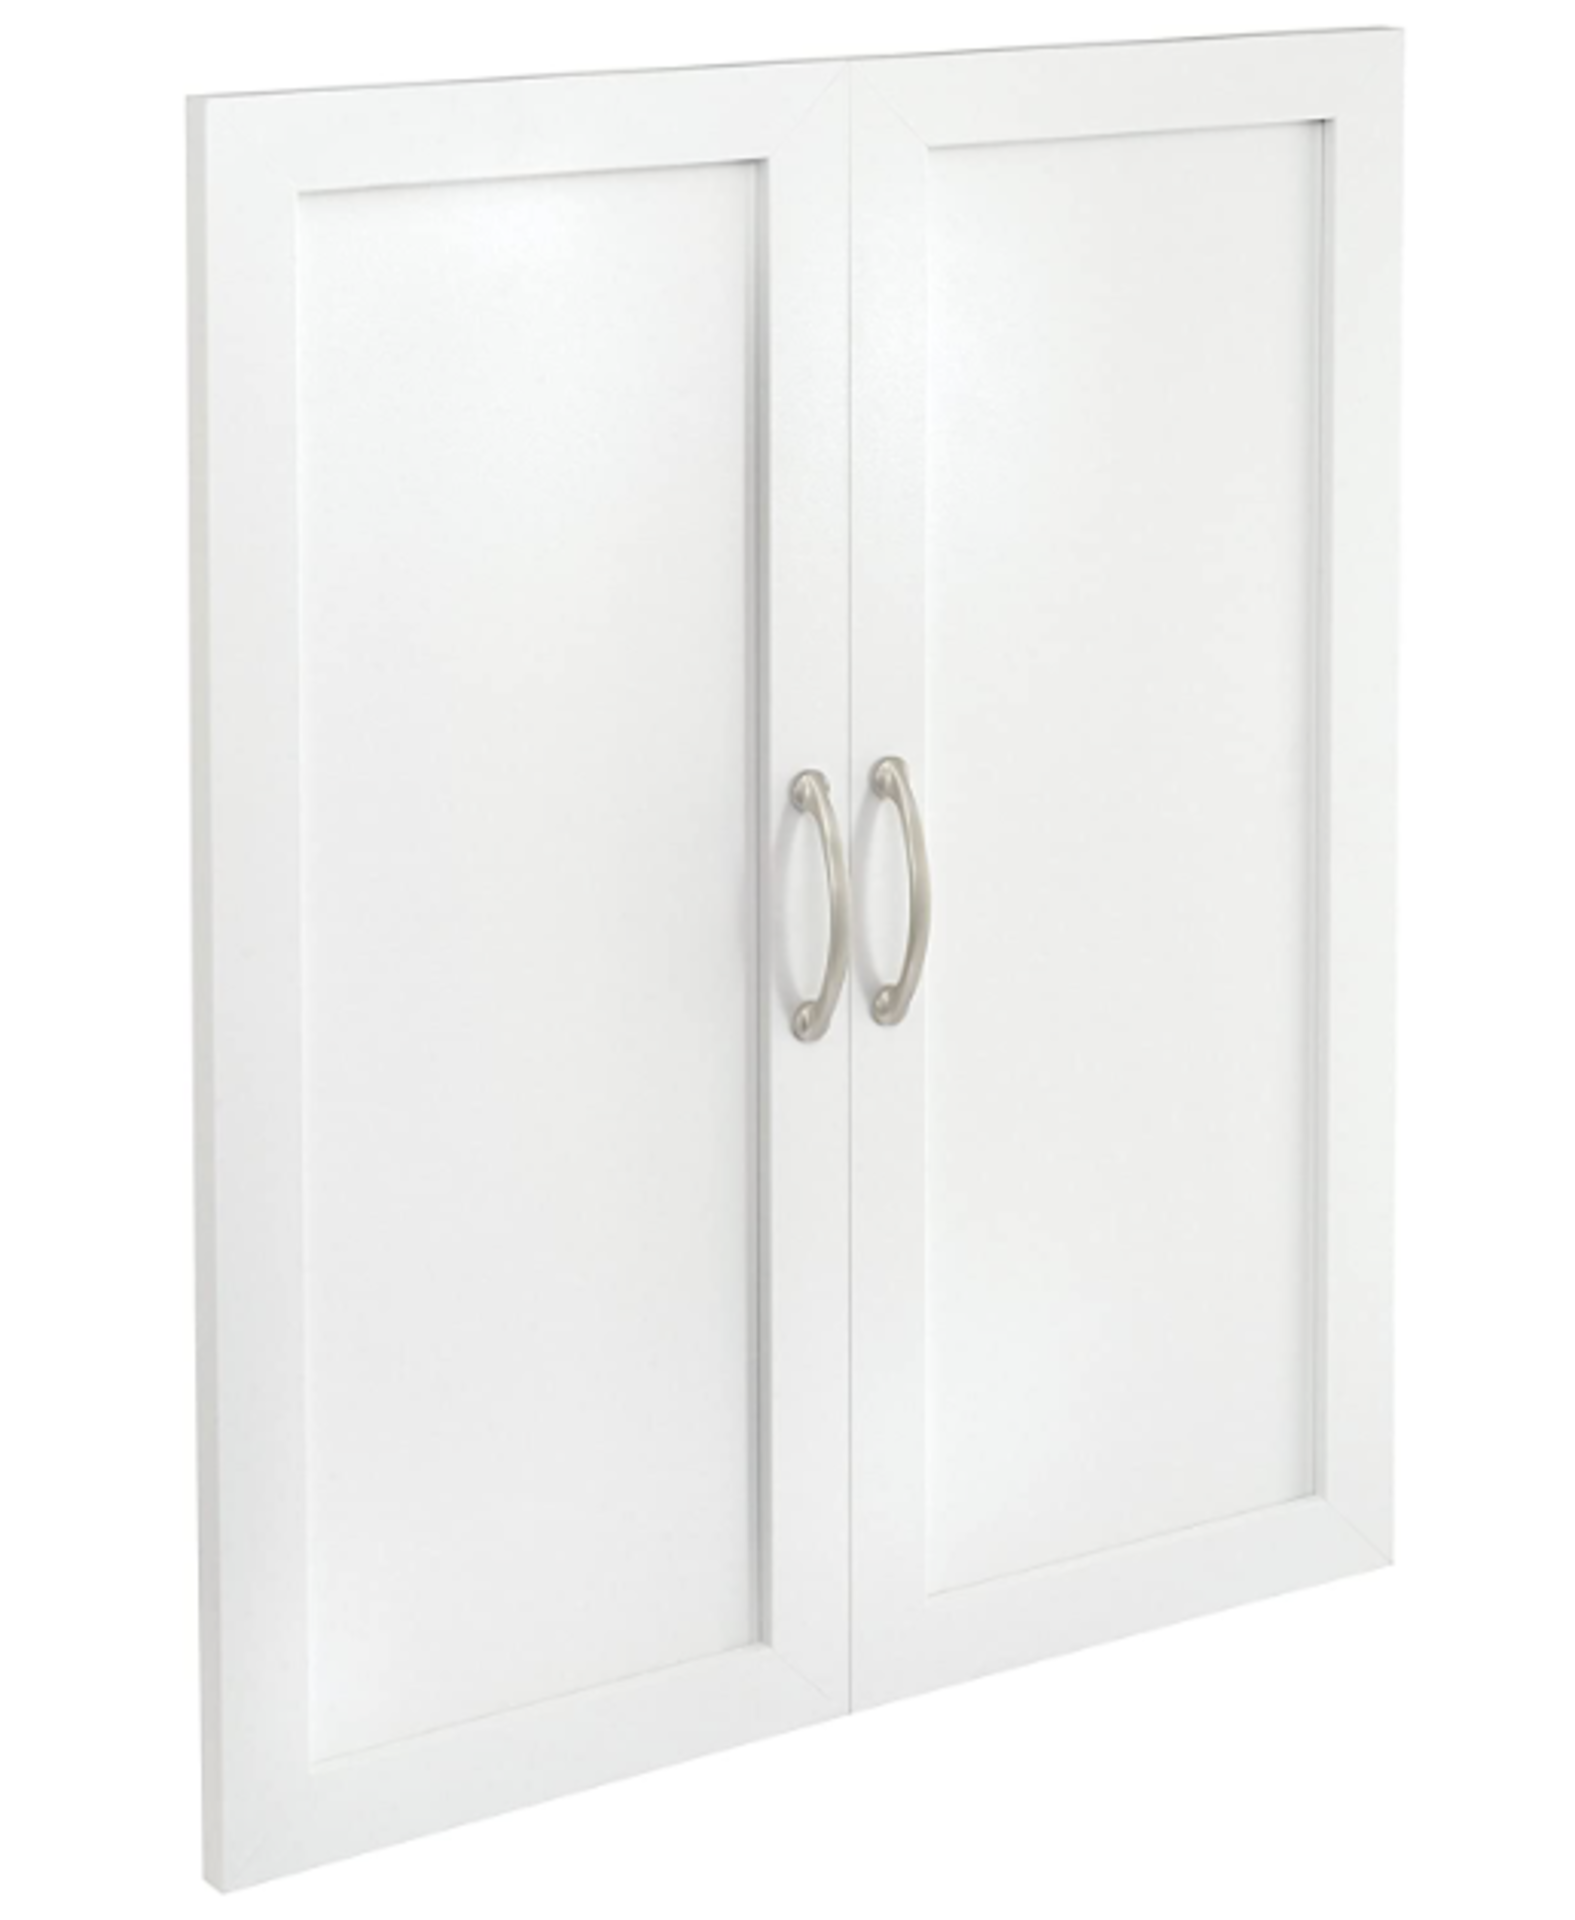 RRP £120 Brand New Boxed Closetmaid Raised Panel Doors - Image 3 of 3